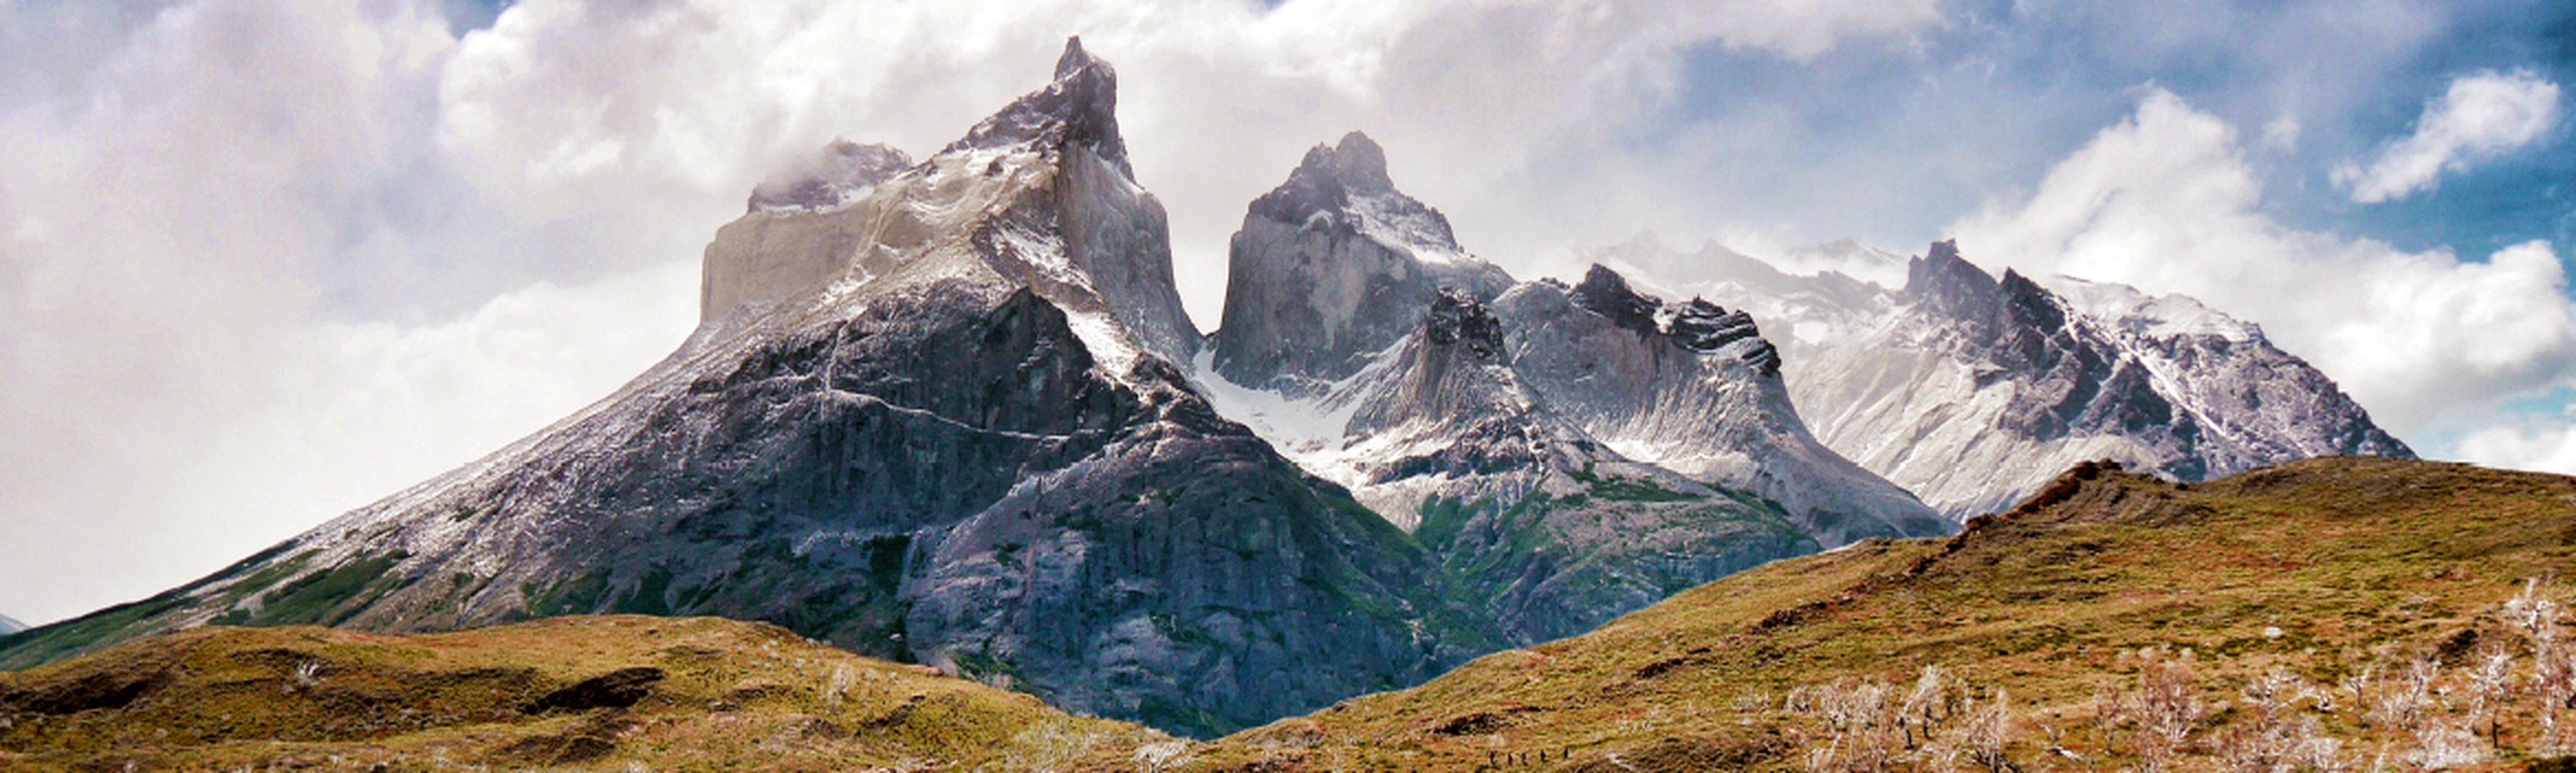 Los Glaciares National Park, Patagonia, Argentina